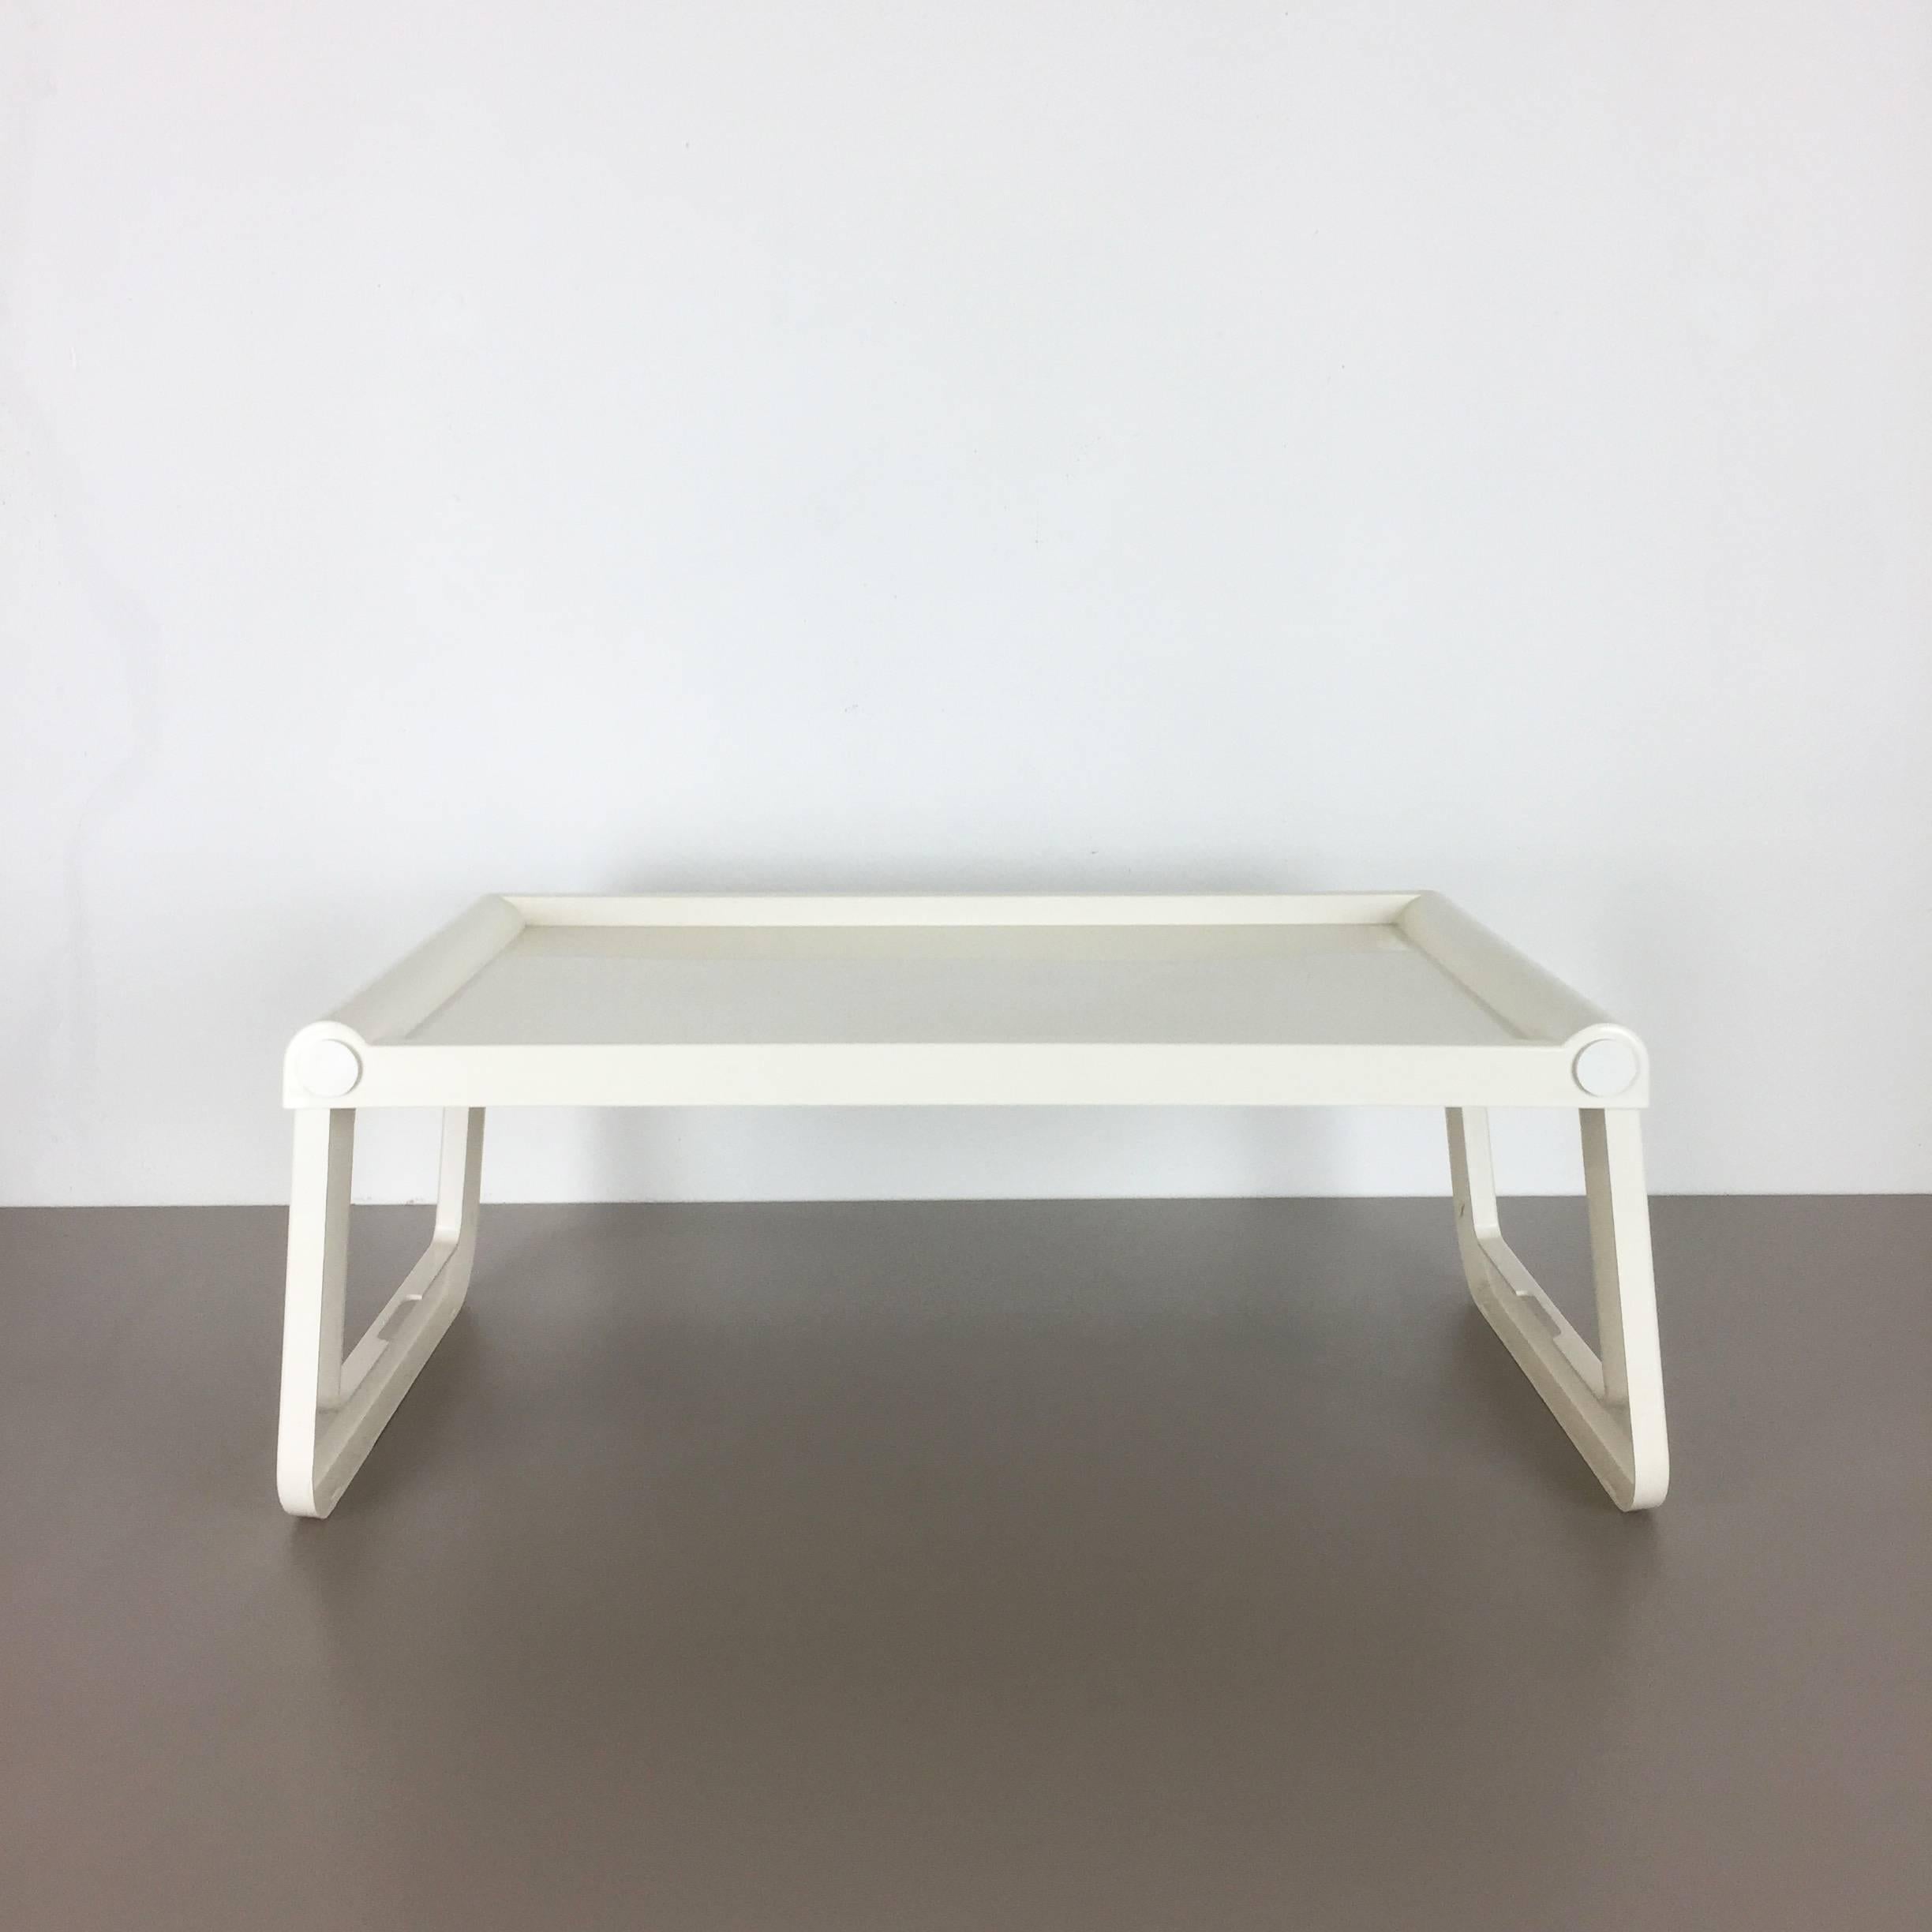 Luigi Massoni Minimalist Plastic White Bed Tray Element by Guzzini, Italy, 1980s For Sale 5